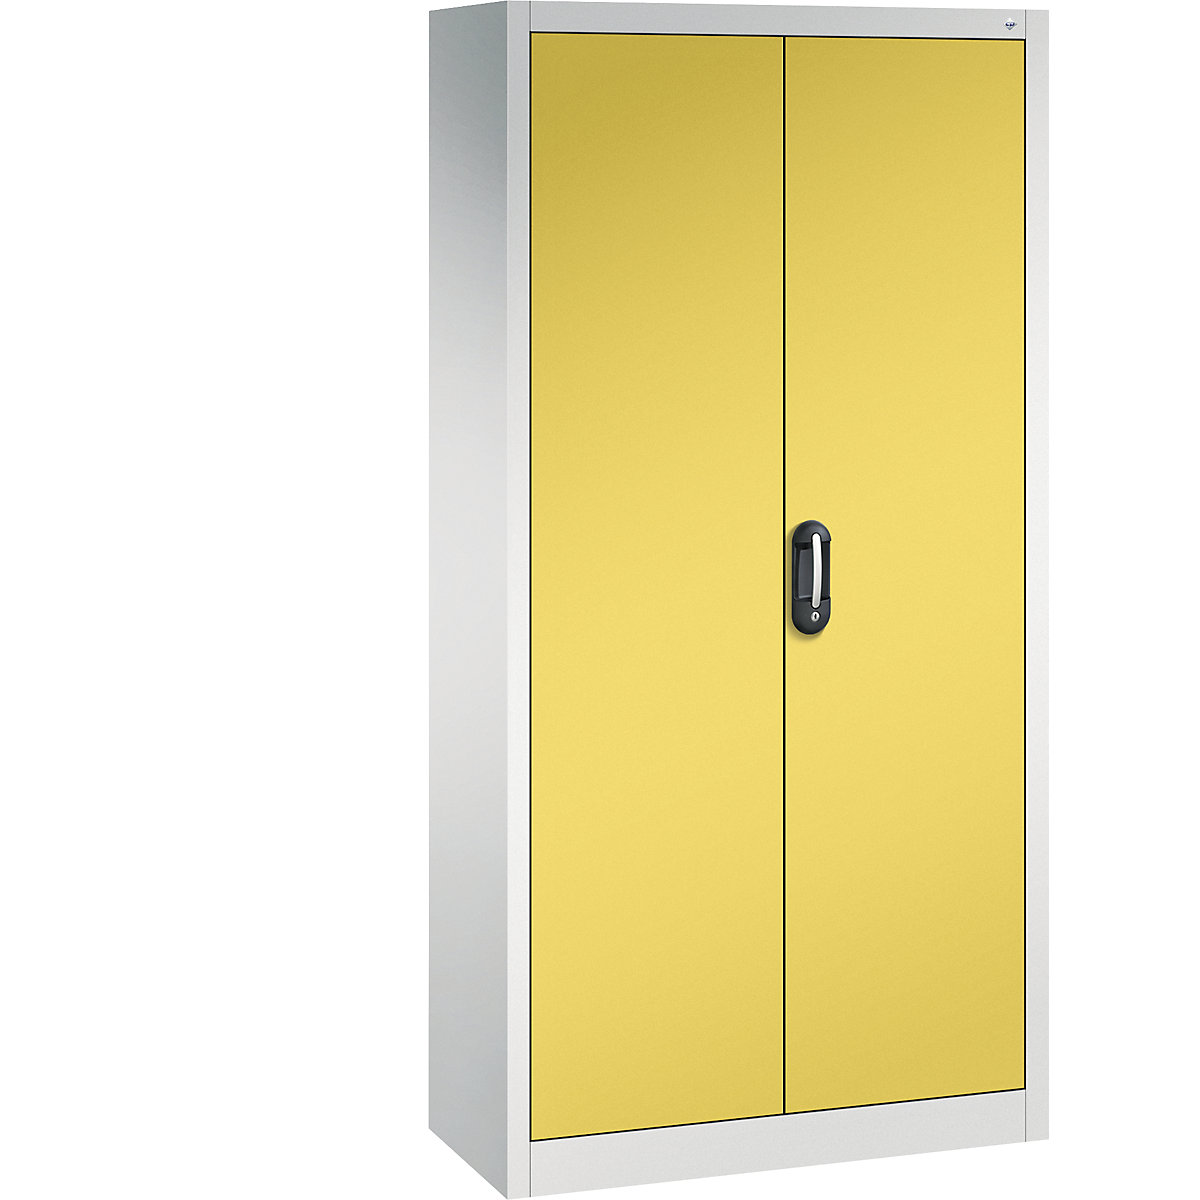 ACURADO universal cupboard – C+P, WxD 930 x 400 mm, light grey / sun yellow, 2+ items-31